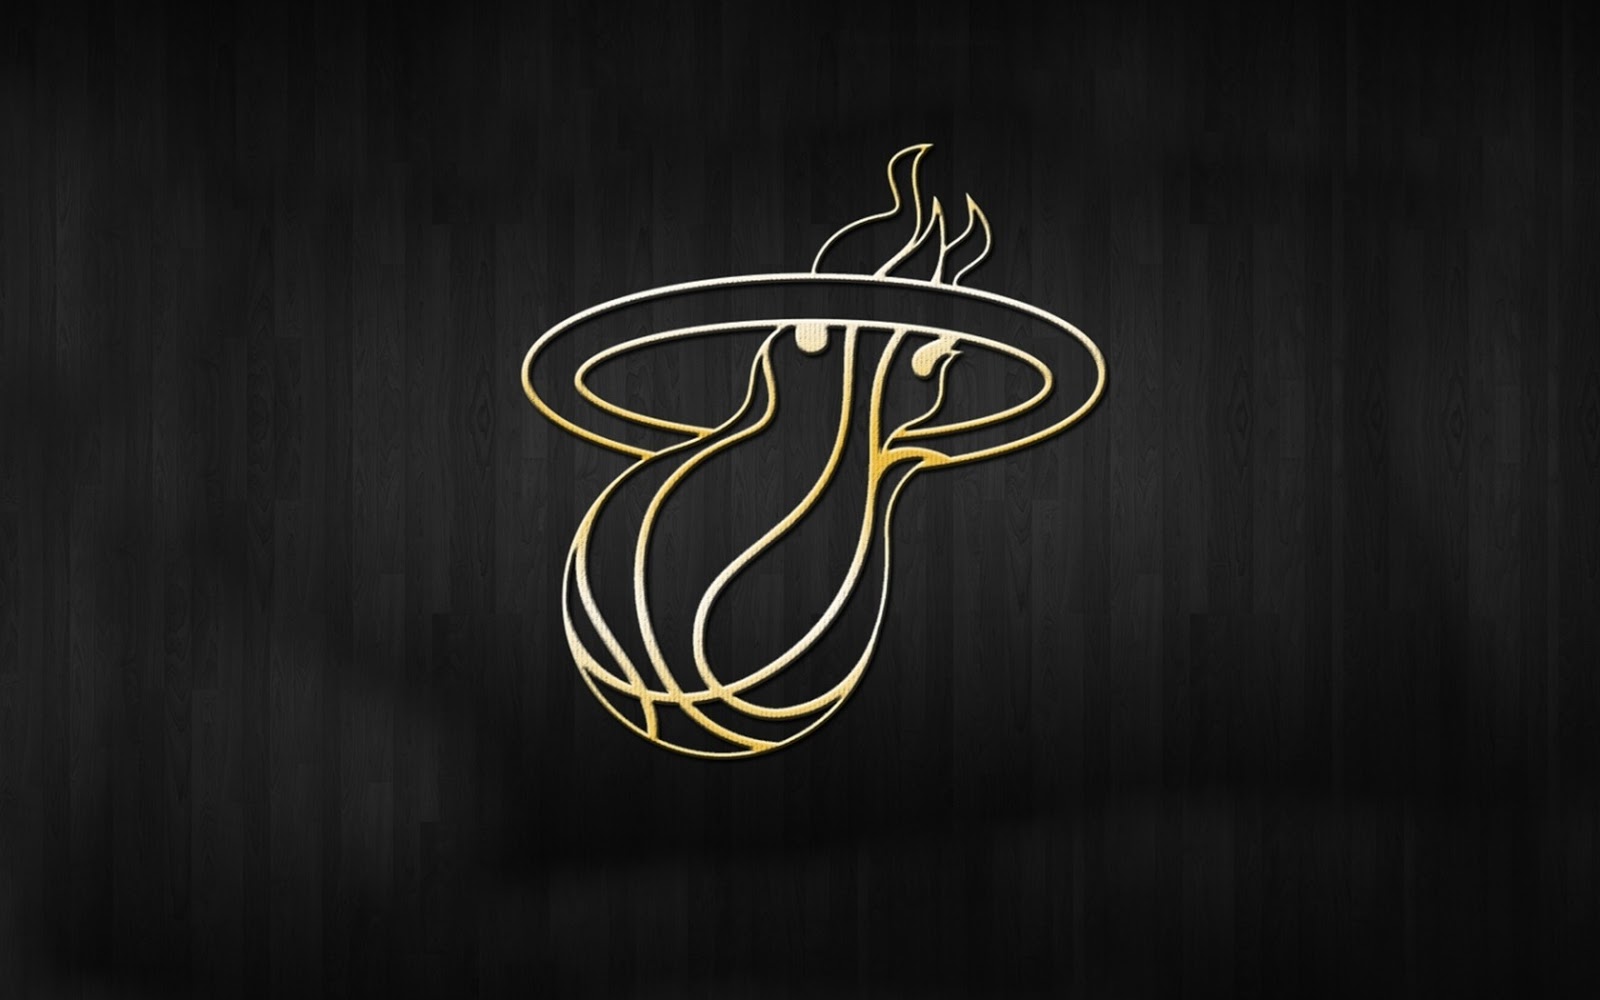 miami heat logo 2014 wallpaper basketball Desktop Backgrounds